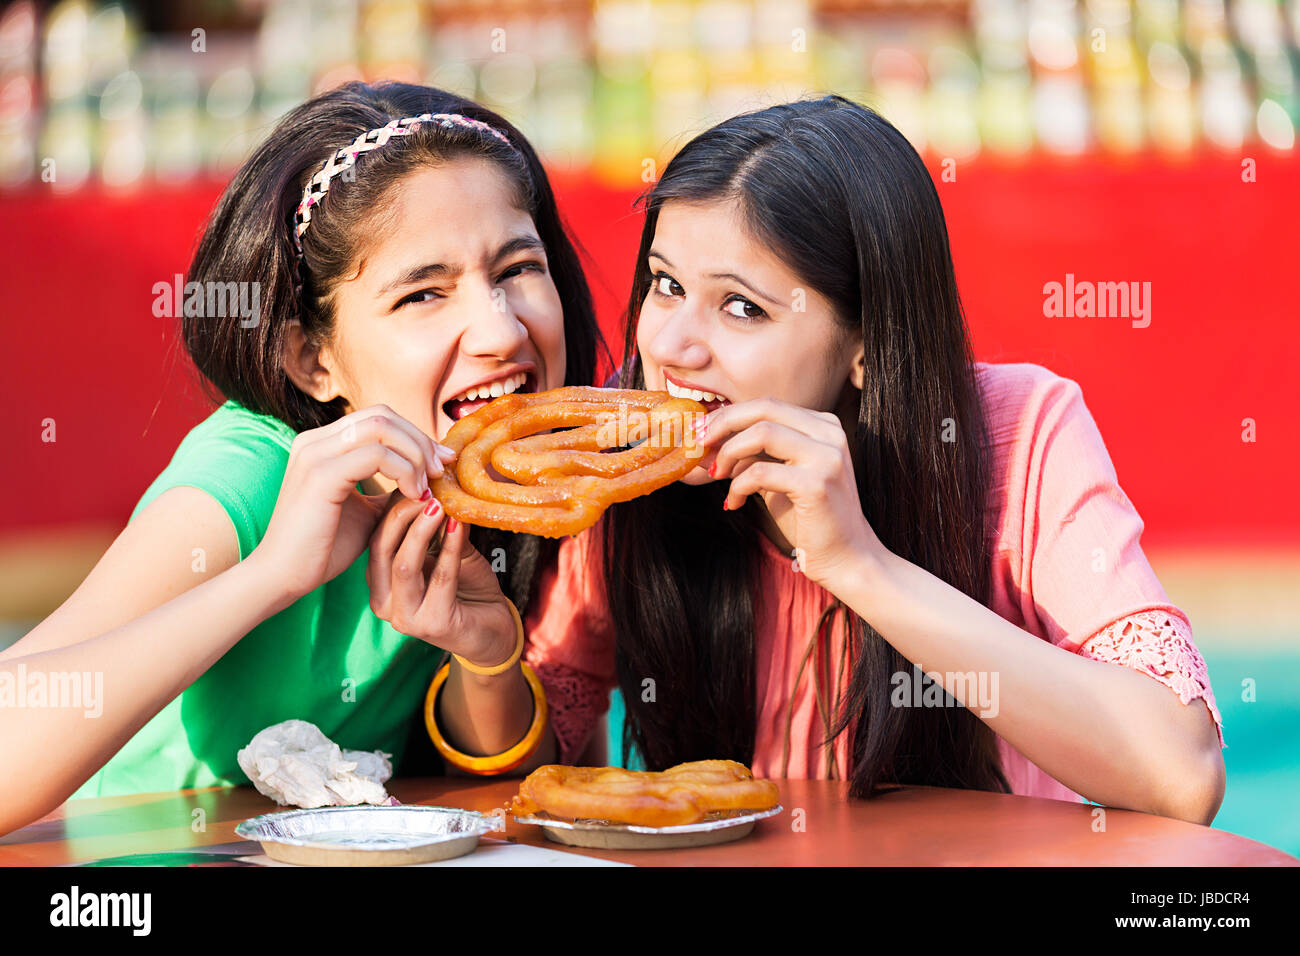 2 Young Girls Friend Eating Jalebi Biting Together Enjoy Restaurant Stock Photo